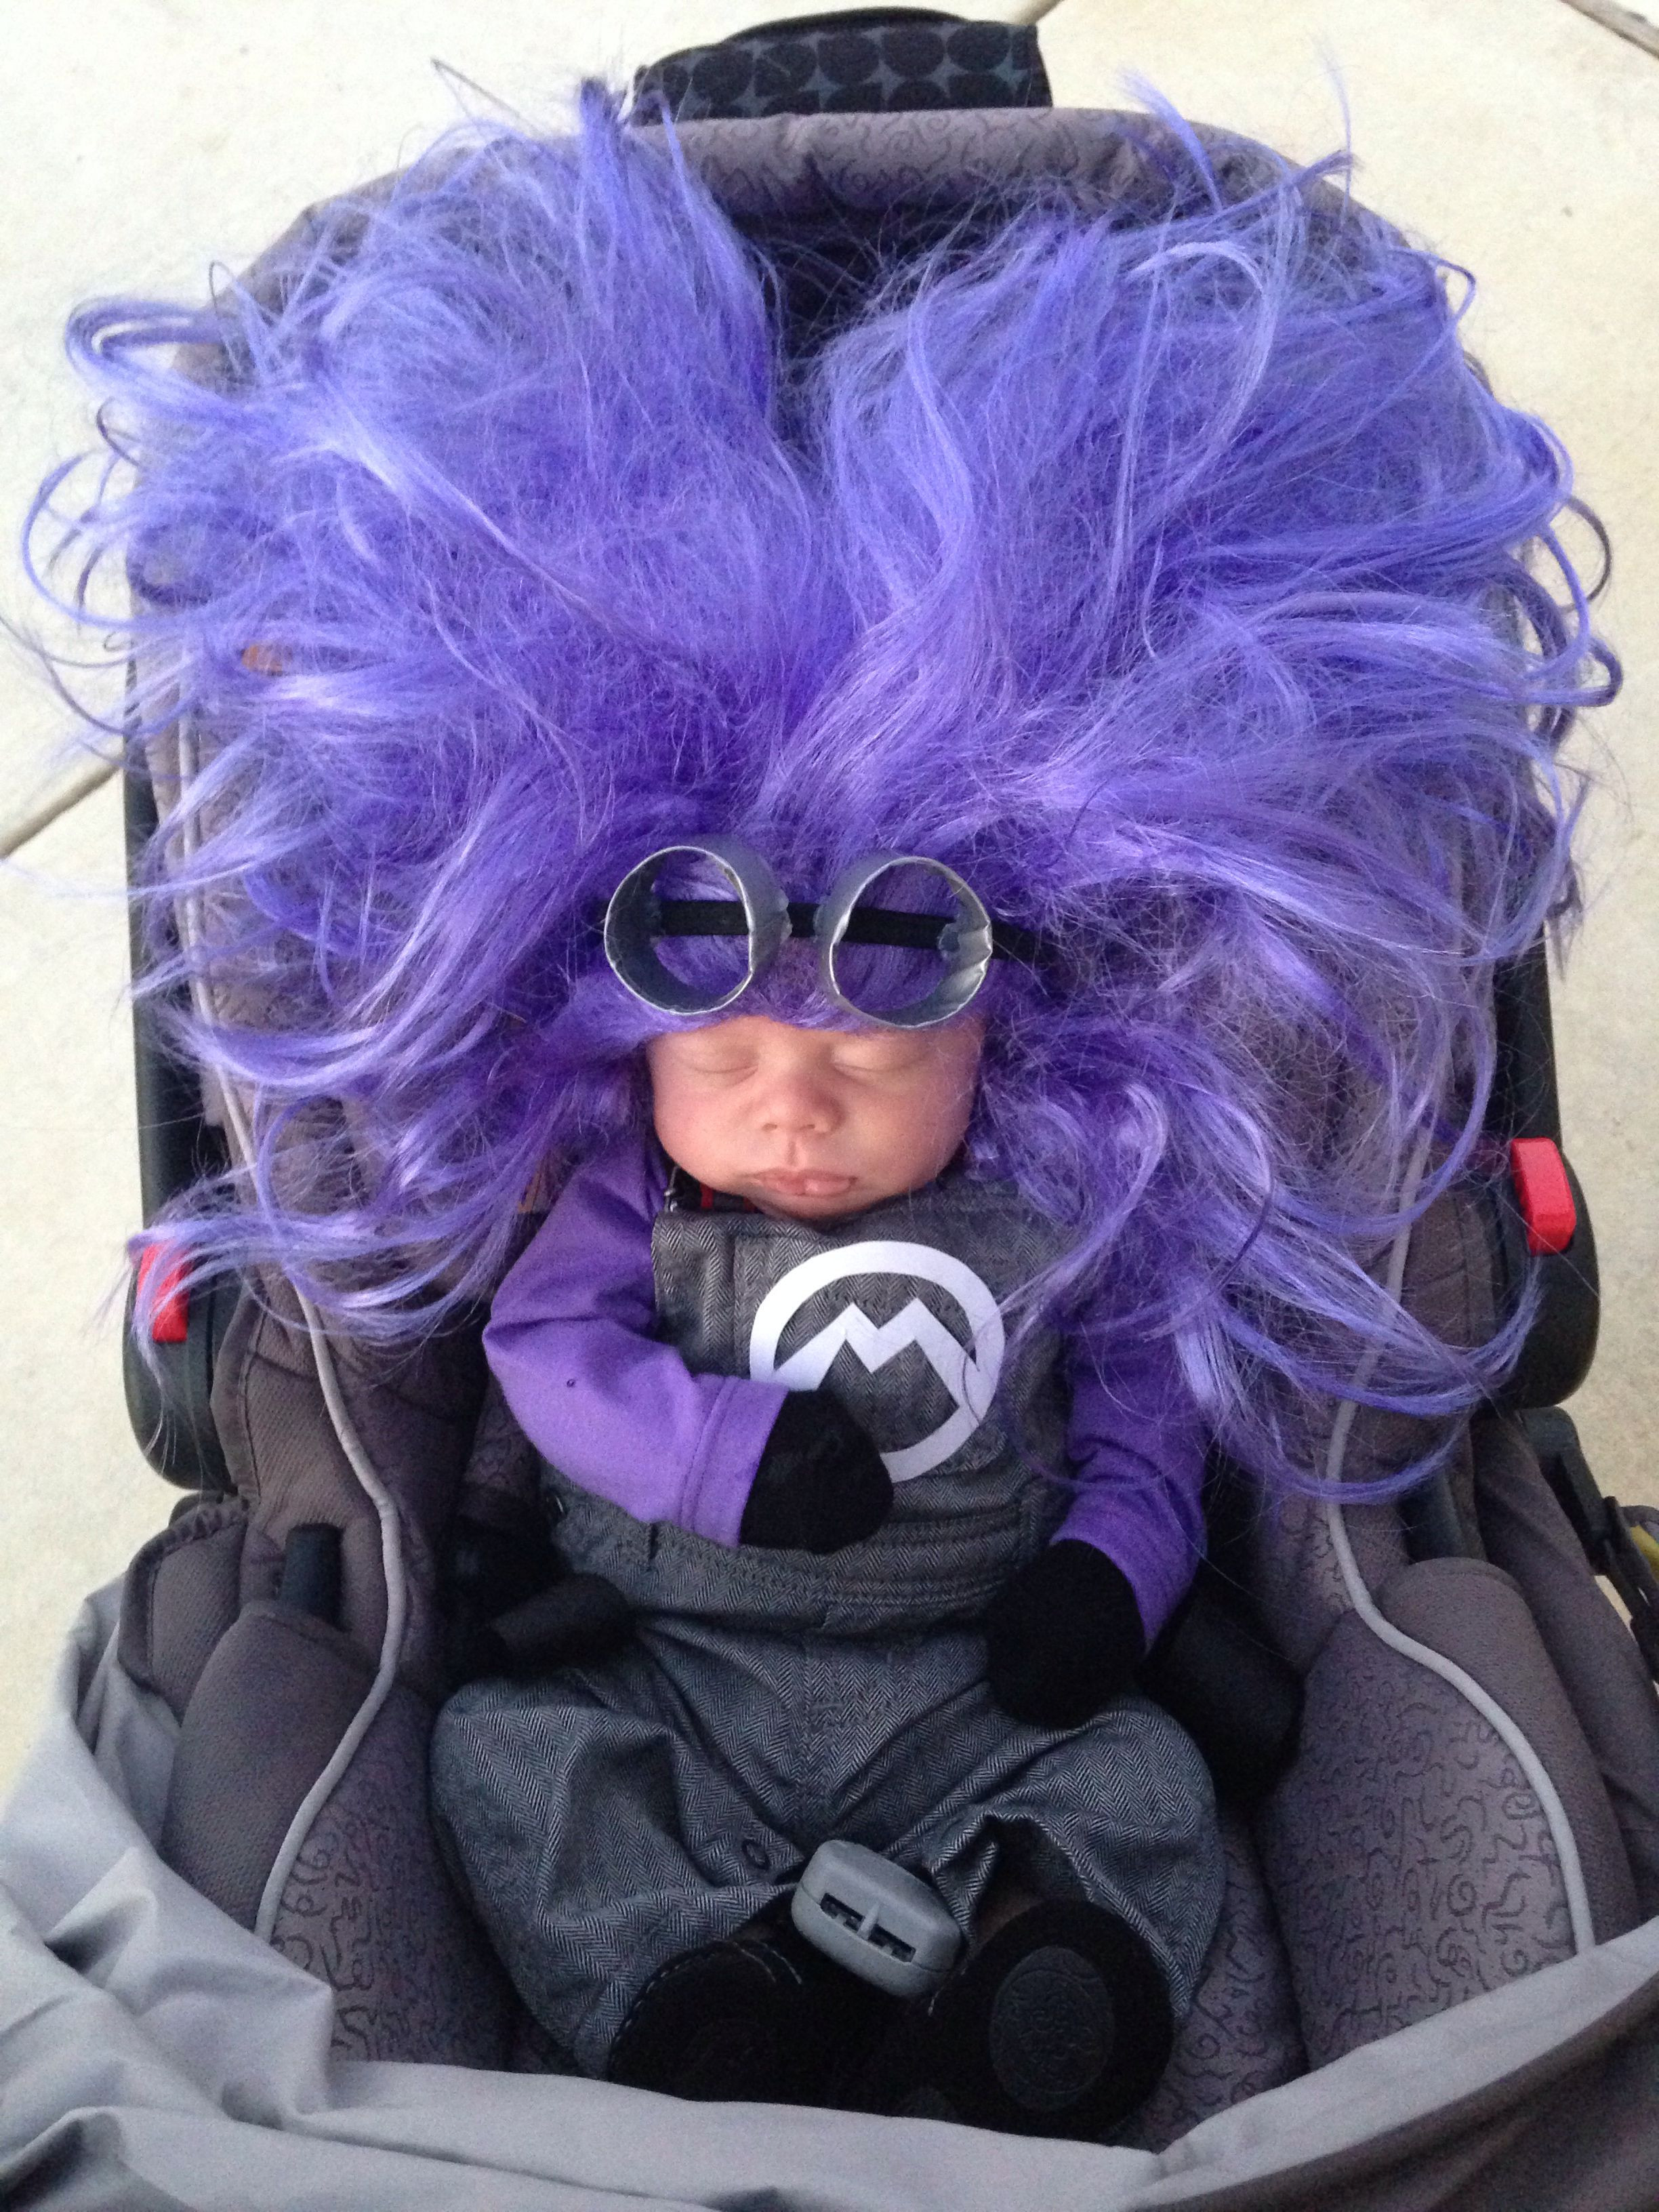 Best ideas about DIY Purple Minion Costume
. Save or Pin Evil purple minion costume DIY Overalls purple long Now.